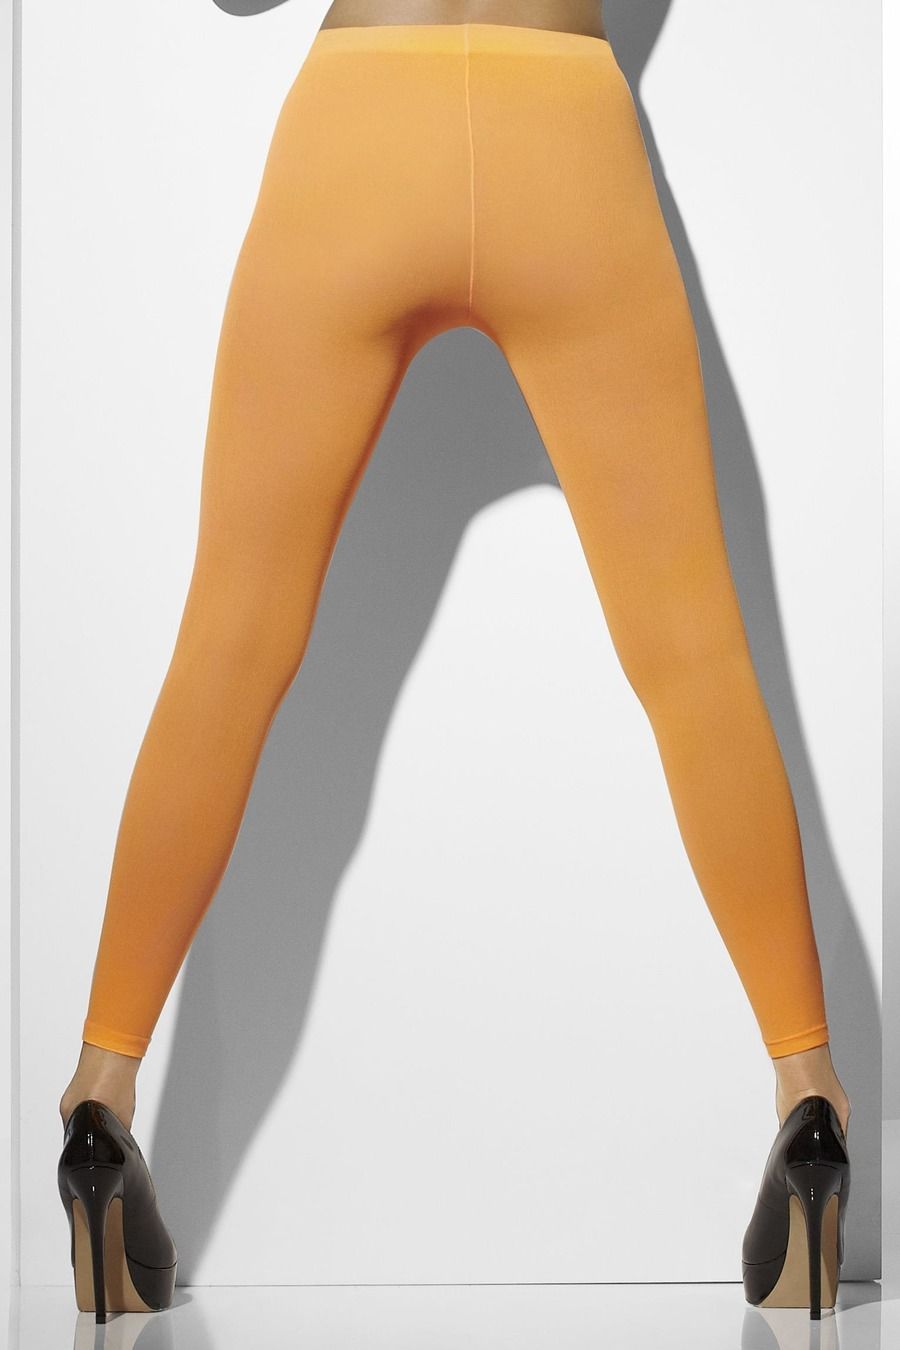 Vervoer Martelaar Verslaving Panty (zonder voet) - neon oranje - Feesthuis